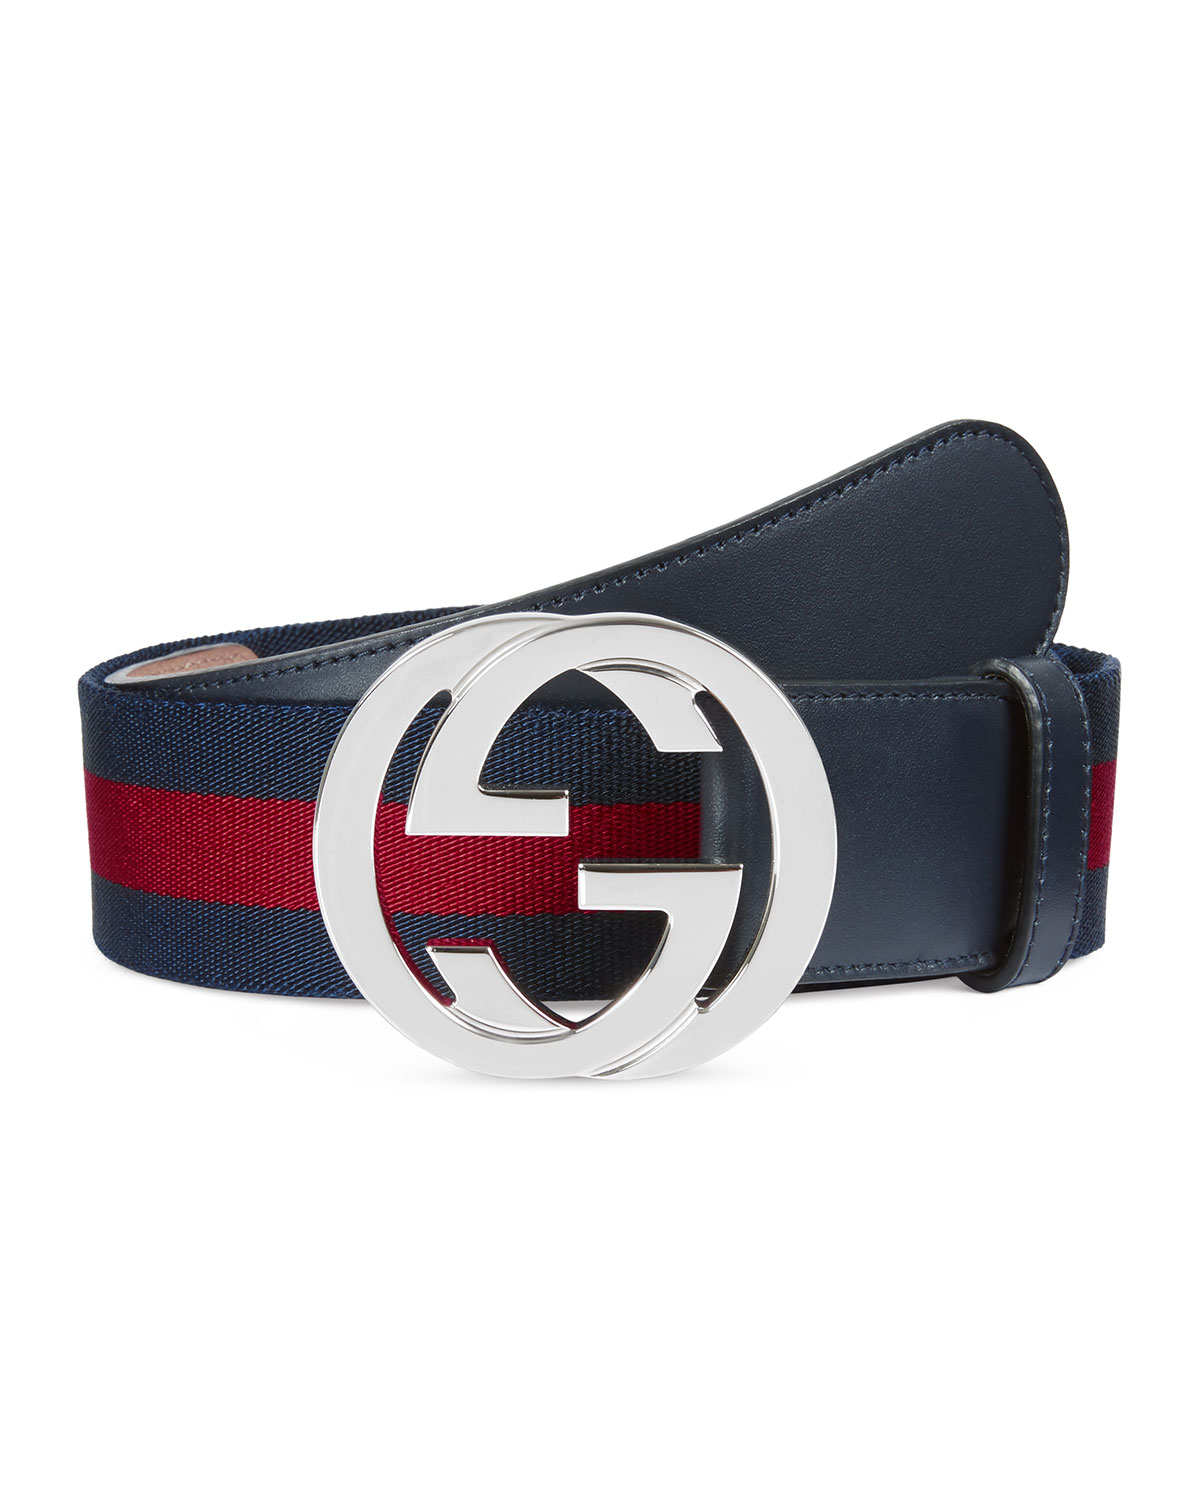 red white blue gucci belt